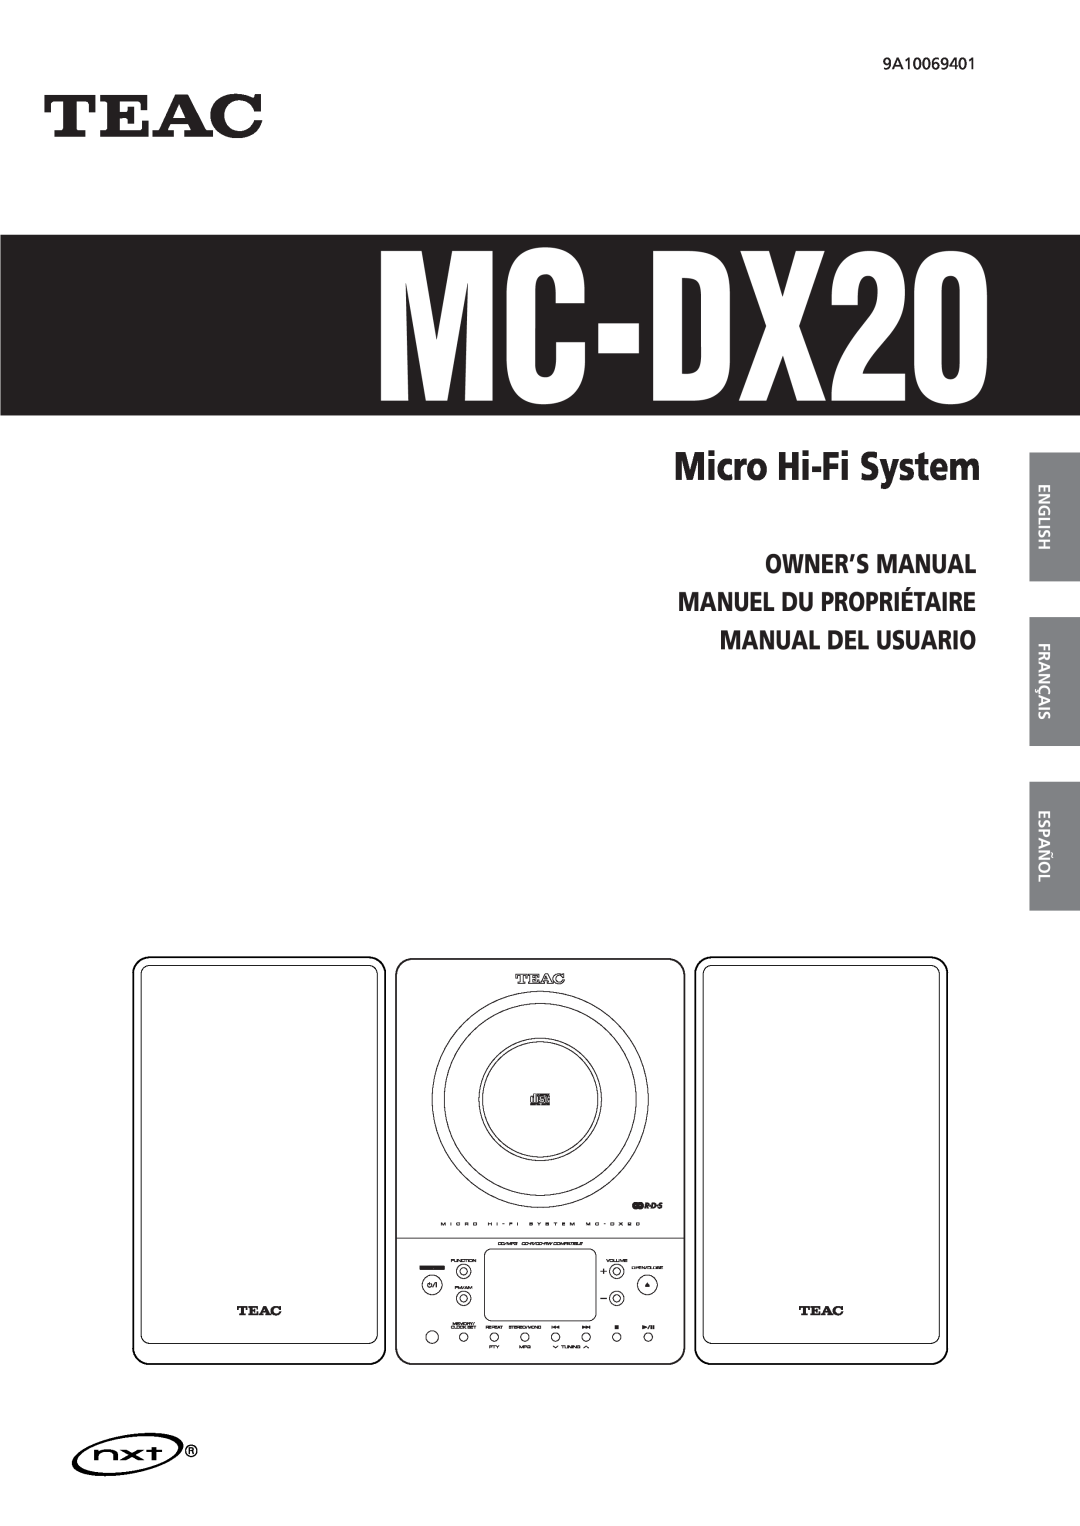 Teac MC-DX20 owner manual Manuel Du Propriétaire, English Français Español, Micro Hi-FiSystem, Manual Del Usuario 